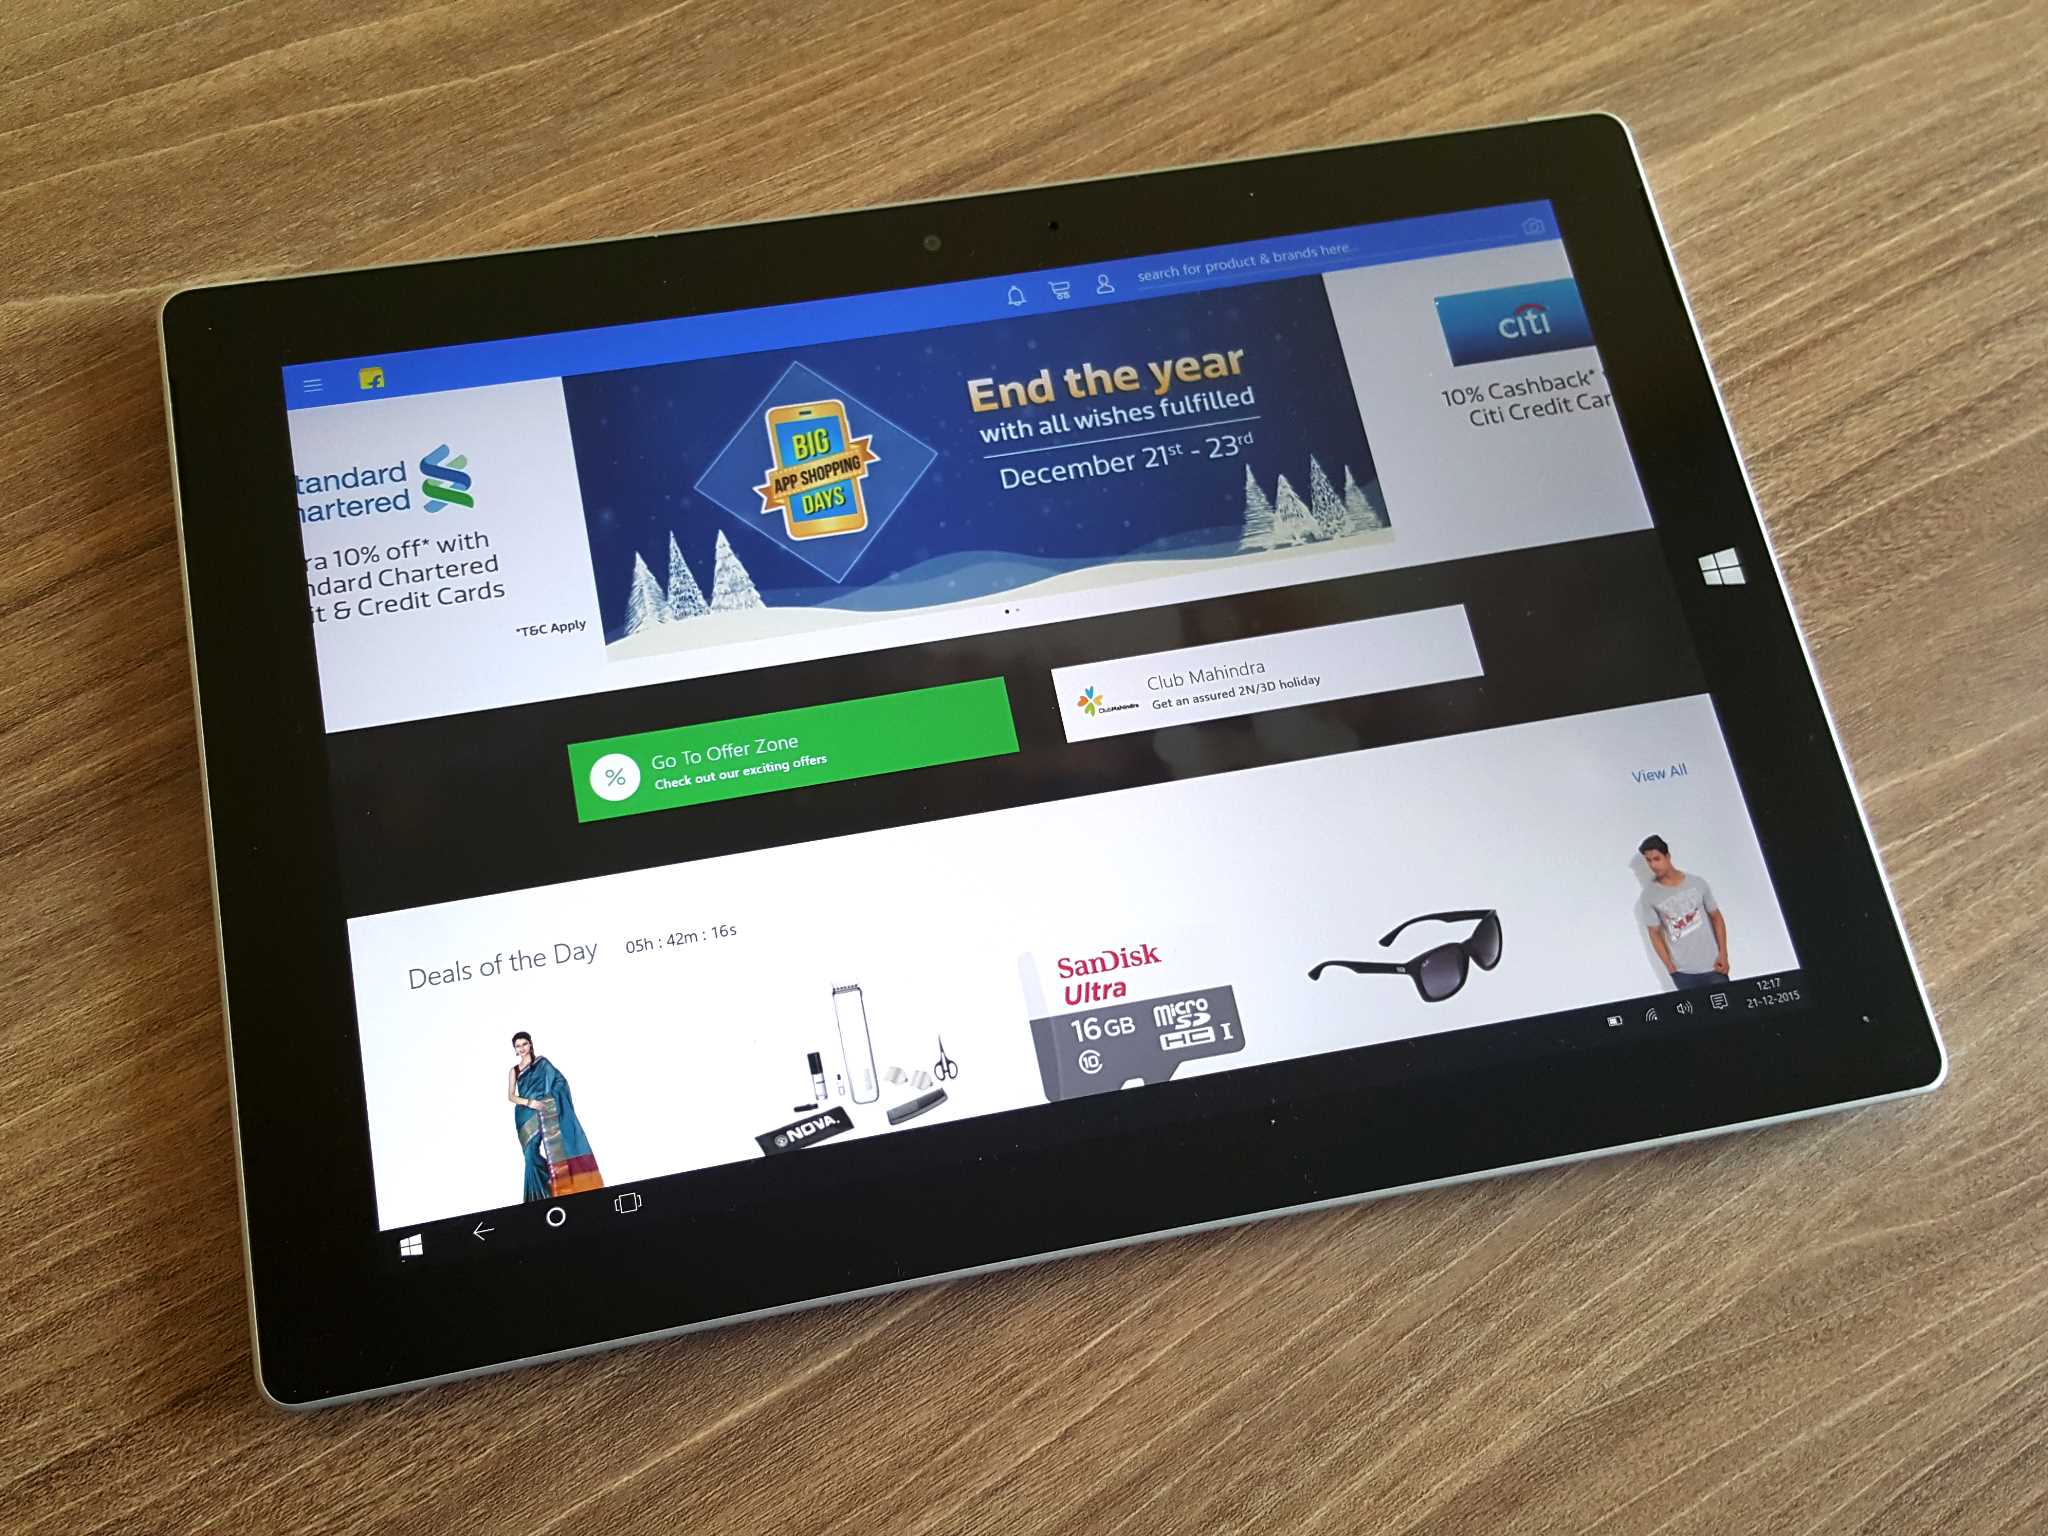 Public beta of Flipkart's Windows 10 PCs and Mobile app now available